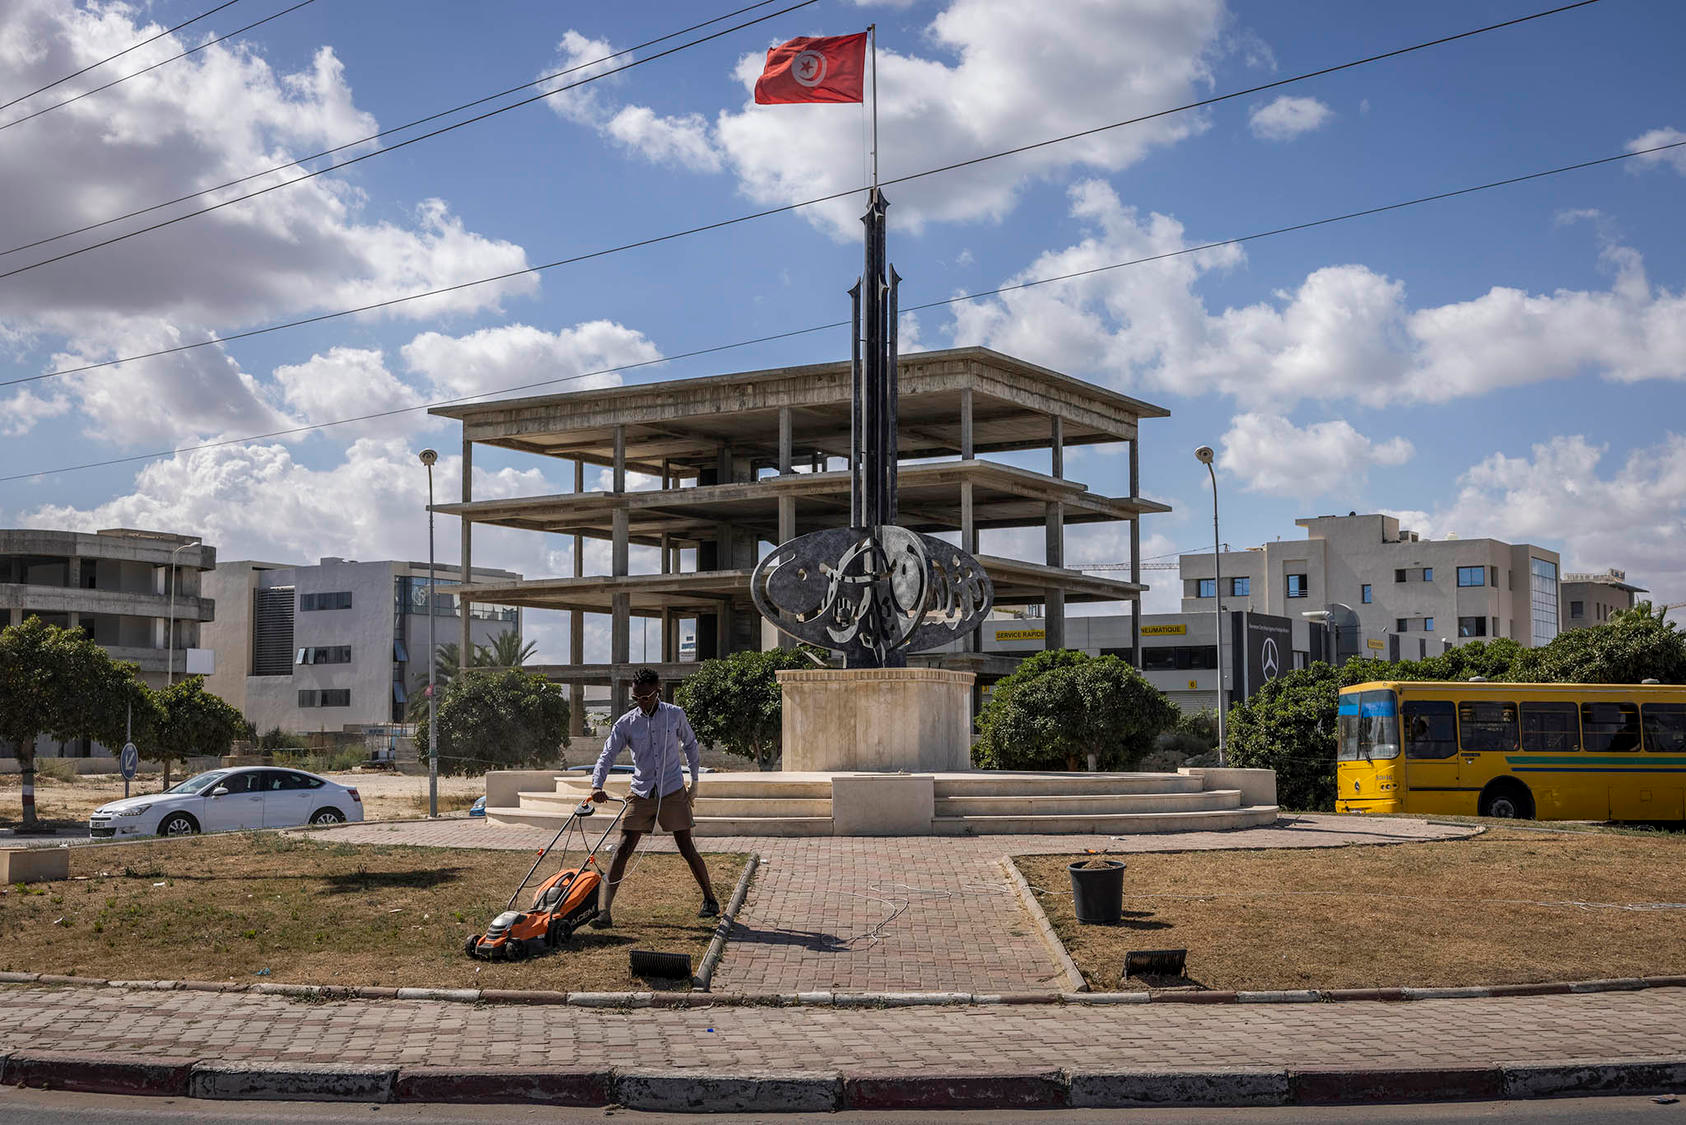 Tunisia’s Twin Democracy and Economic Crises Push it to the Brink